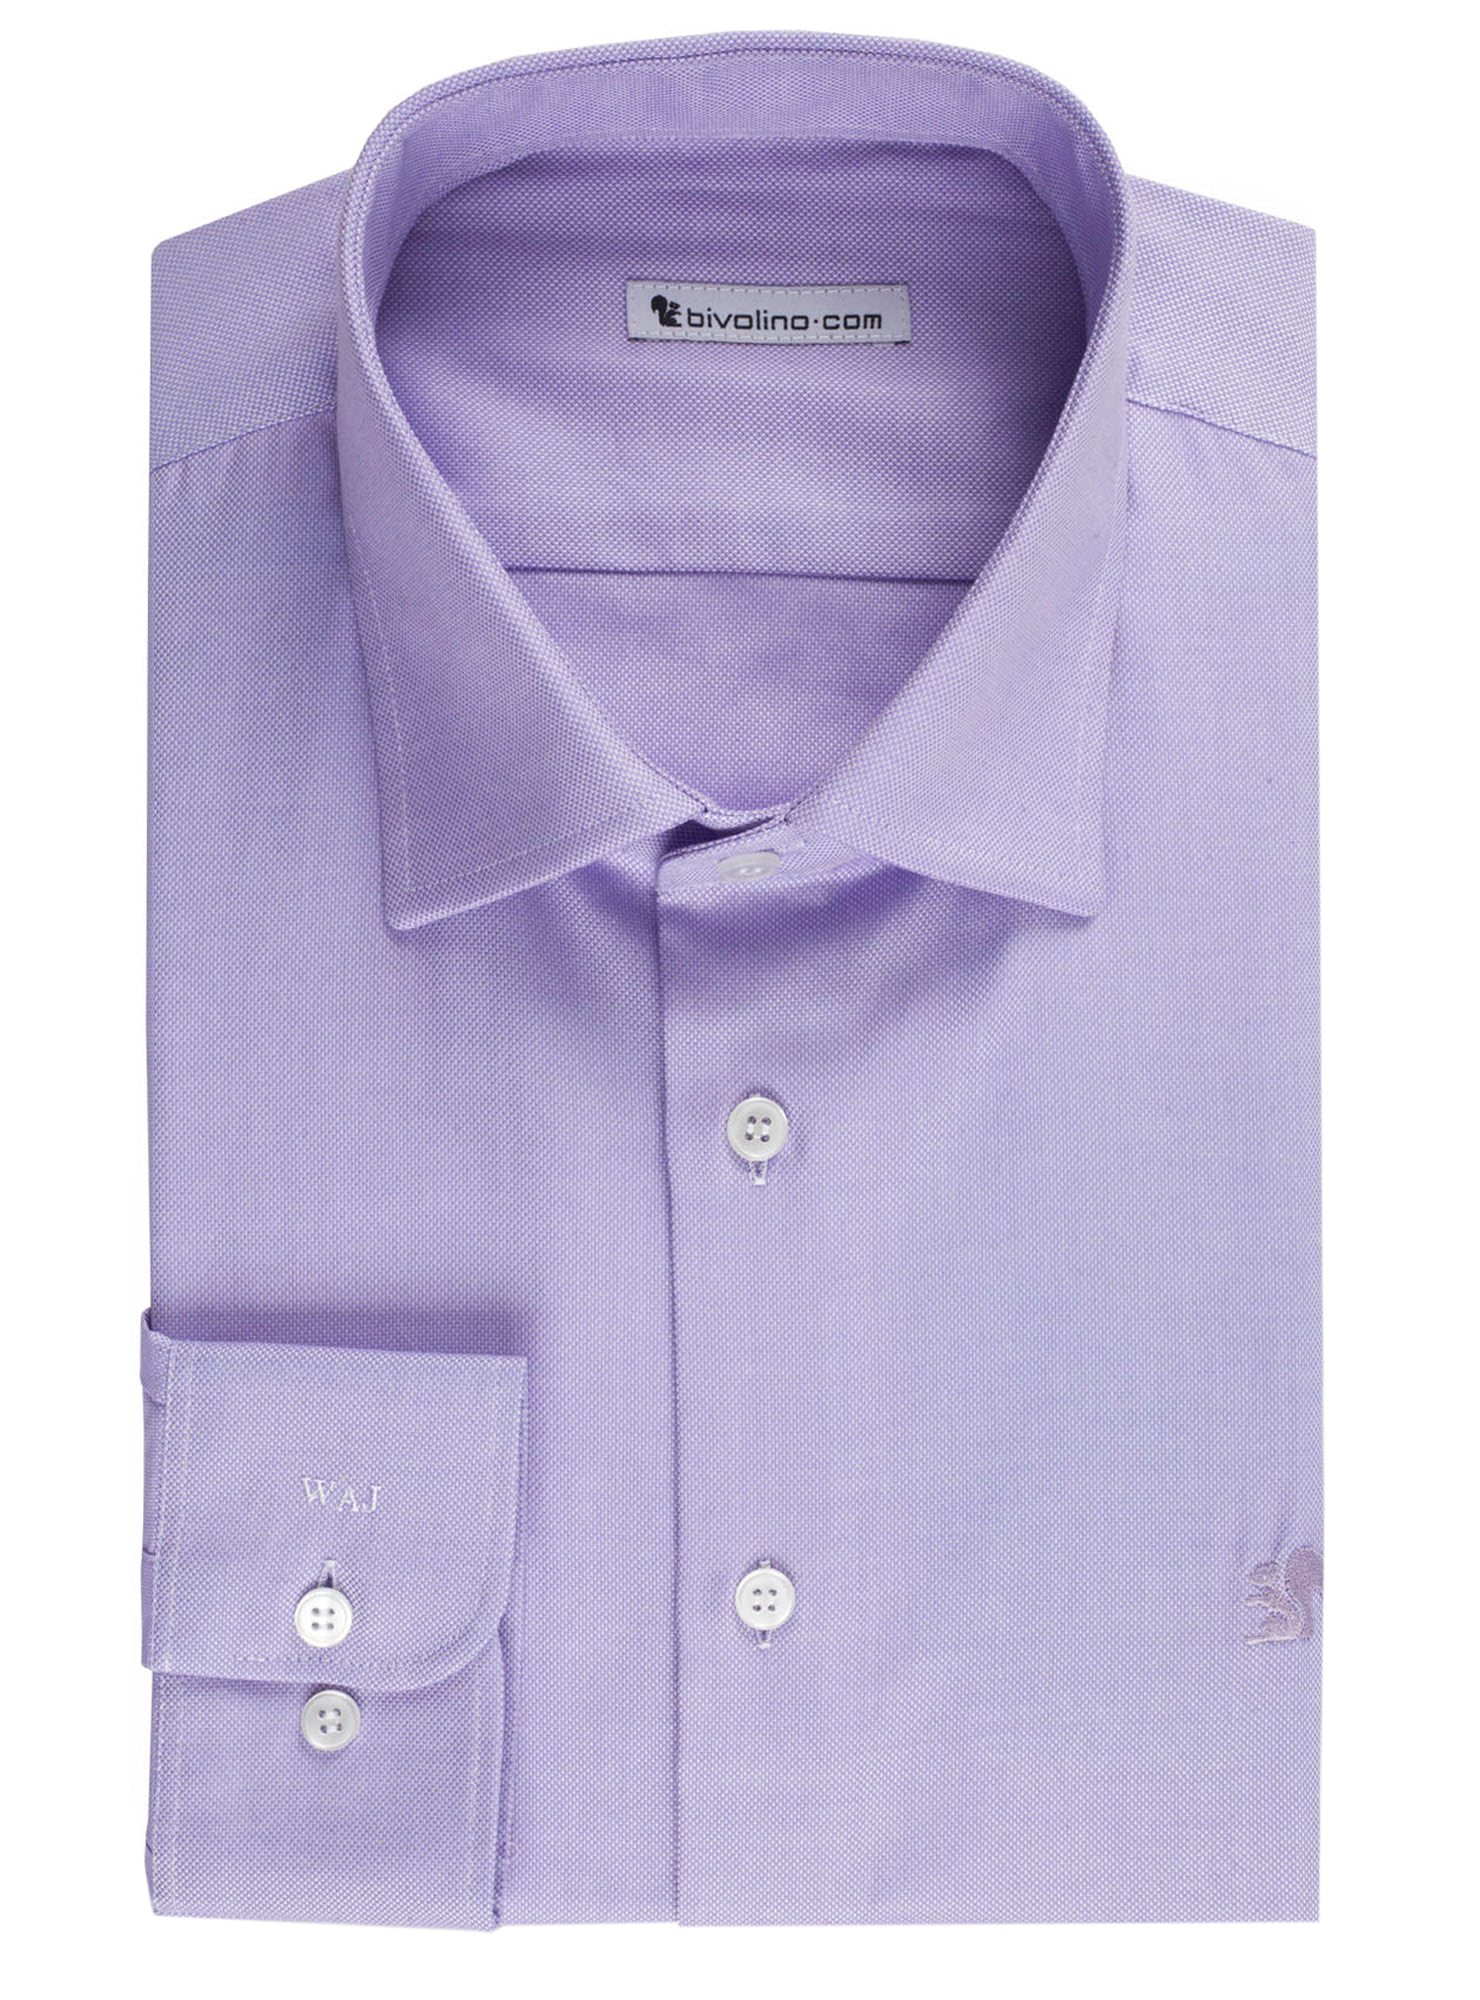 Cizzolo - shirt royal oxford lilac - Laba 6 Clifton 